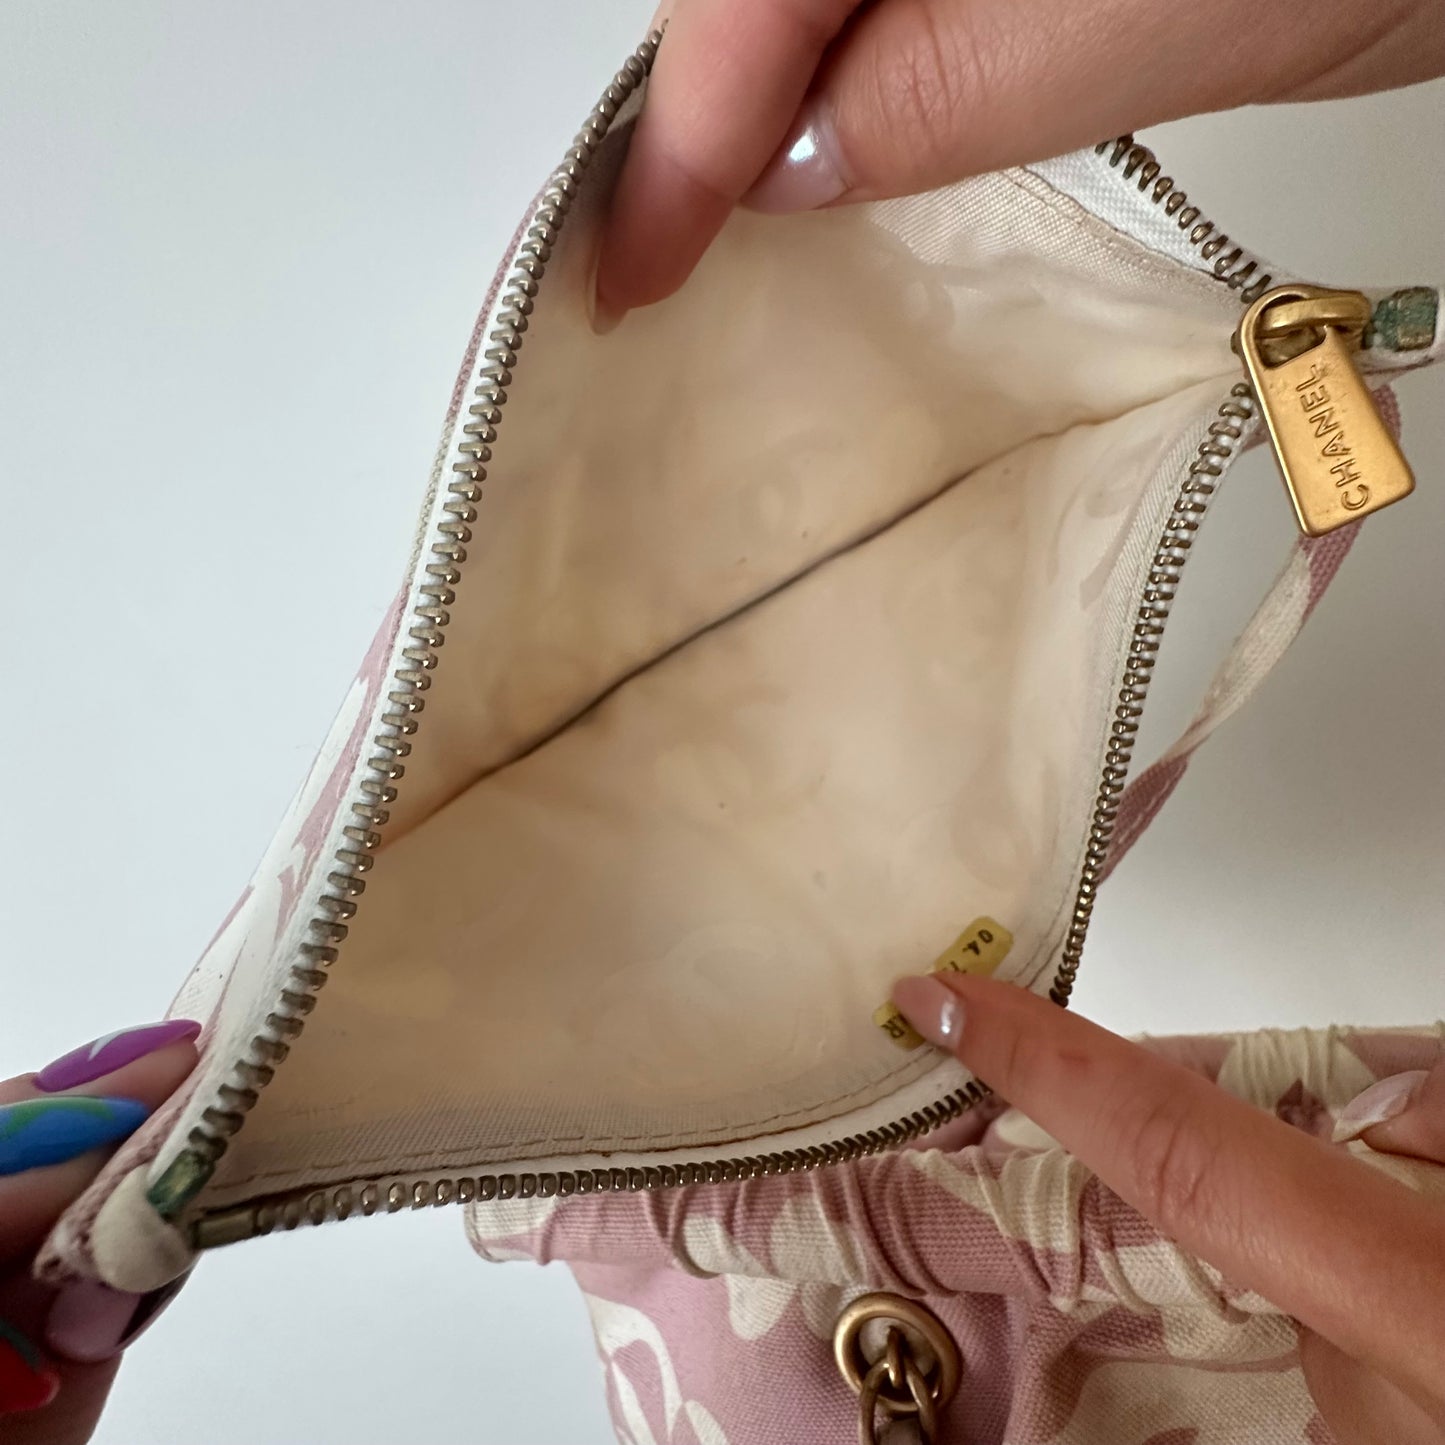 Chanel Pink Clover Print Shoulder Bag w/ Interior Pouch